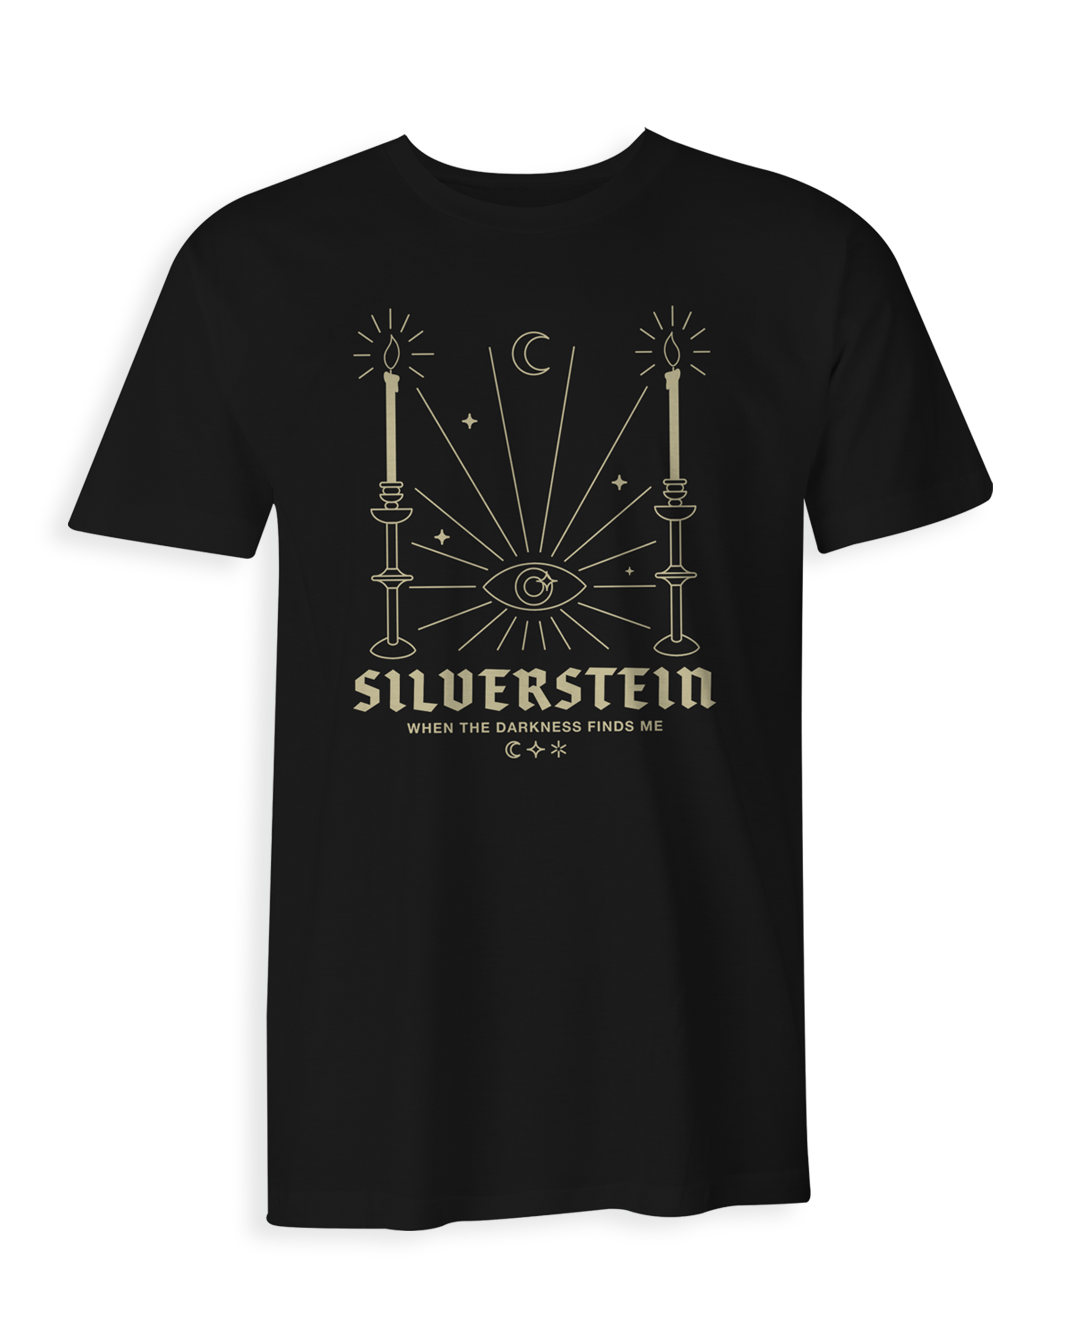 Silverstein Candles T-Shirt